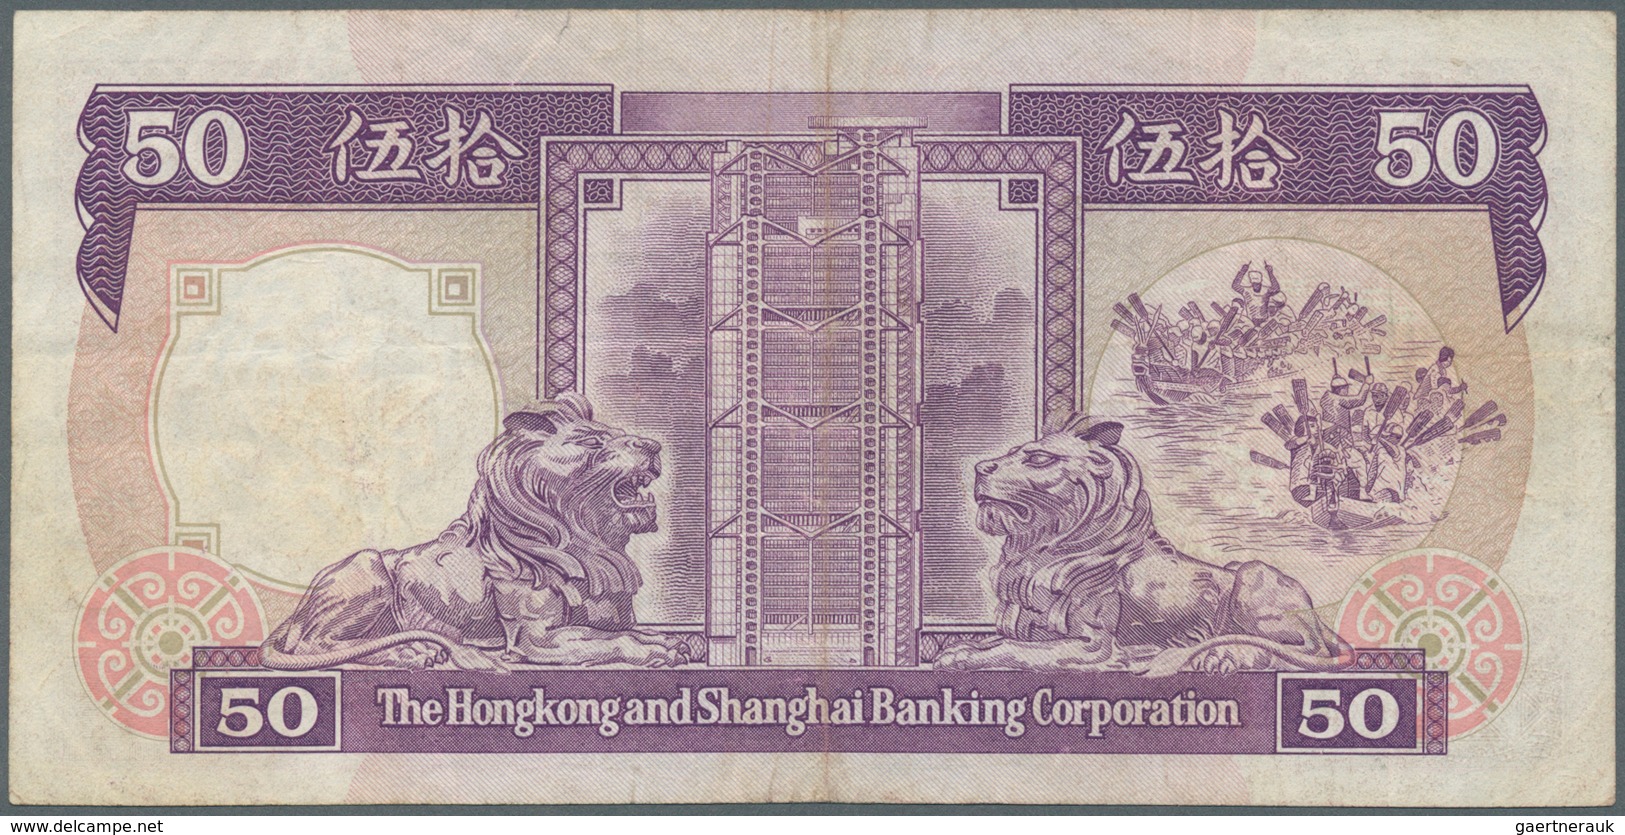 Hong Kong: set of 19 banknotes containing 10 Dollars The Chartered Bank 1977 P. 74c (UNC), 5 Dollars